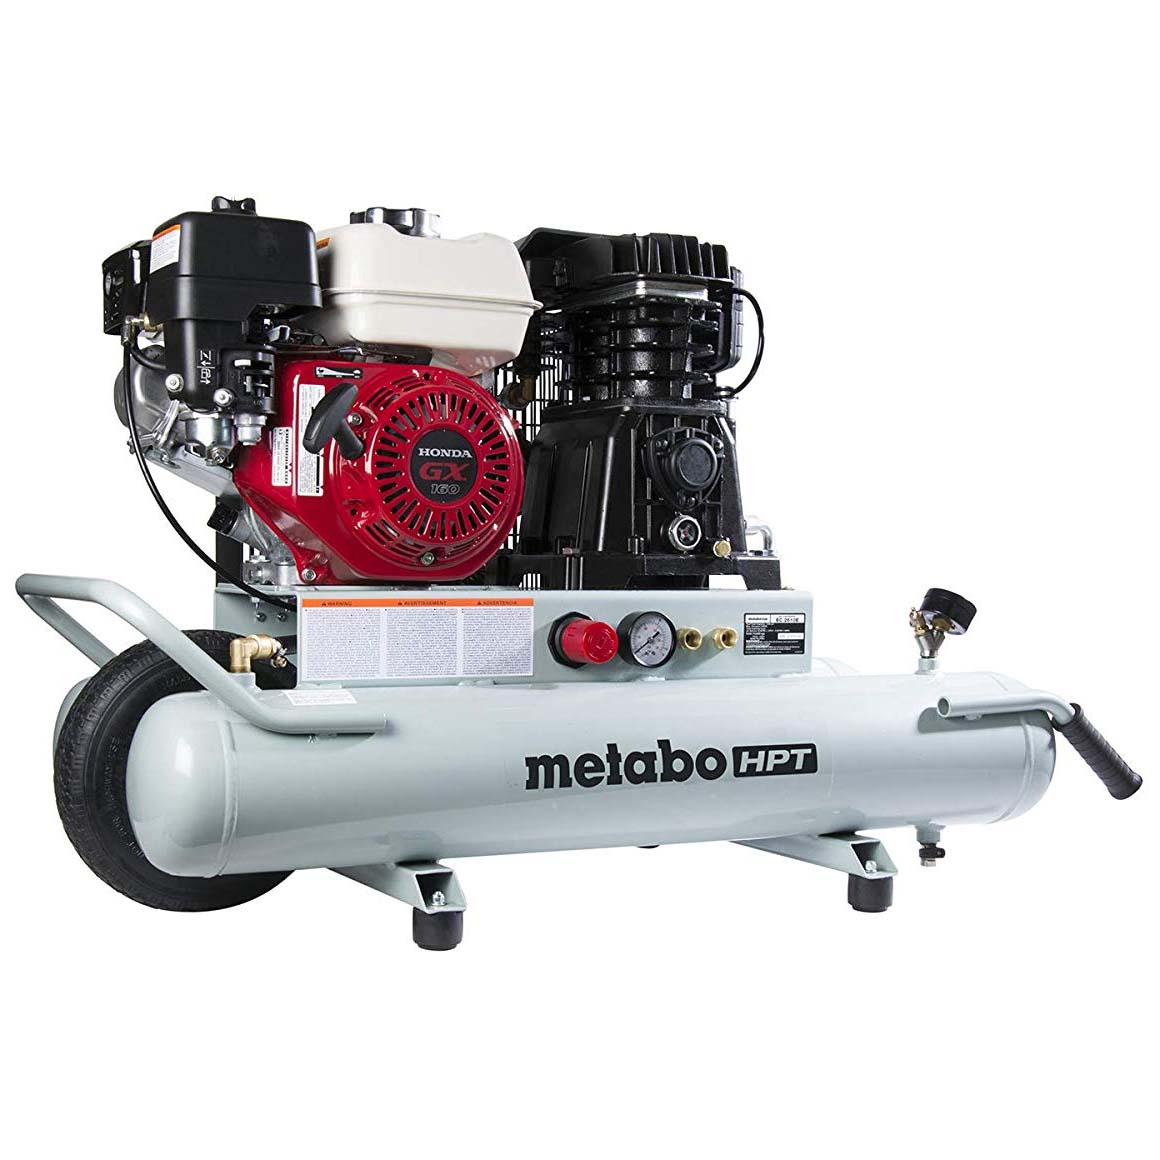 Metabo HPT 8-Gallon Gas Powered Wheelbarrow Air Compressor Helpful 1